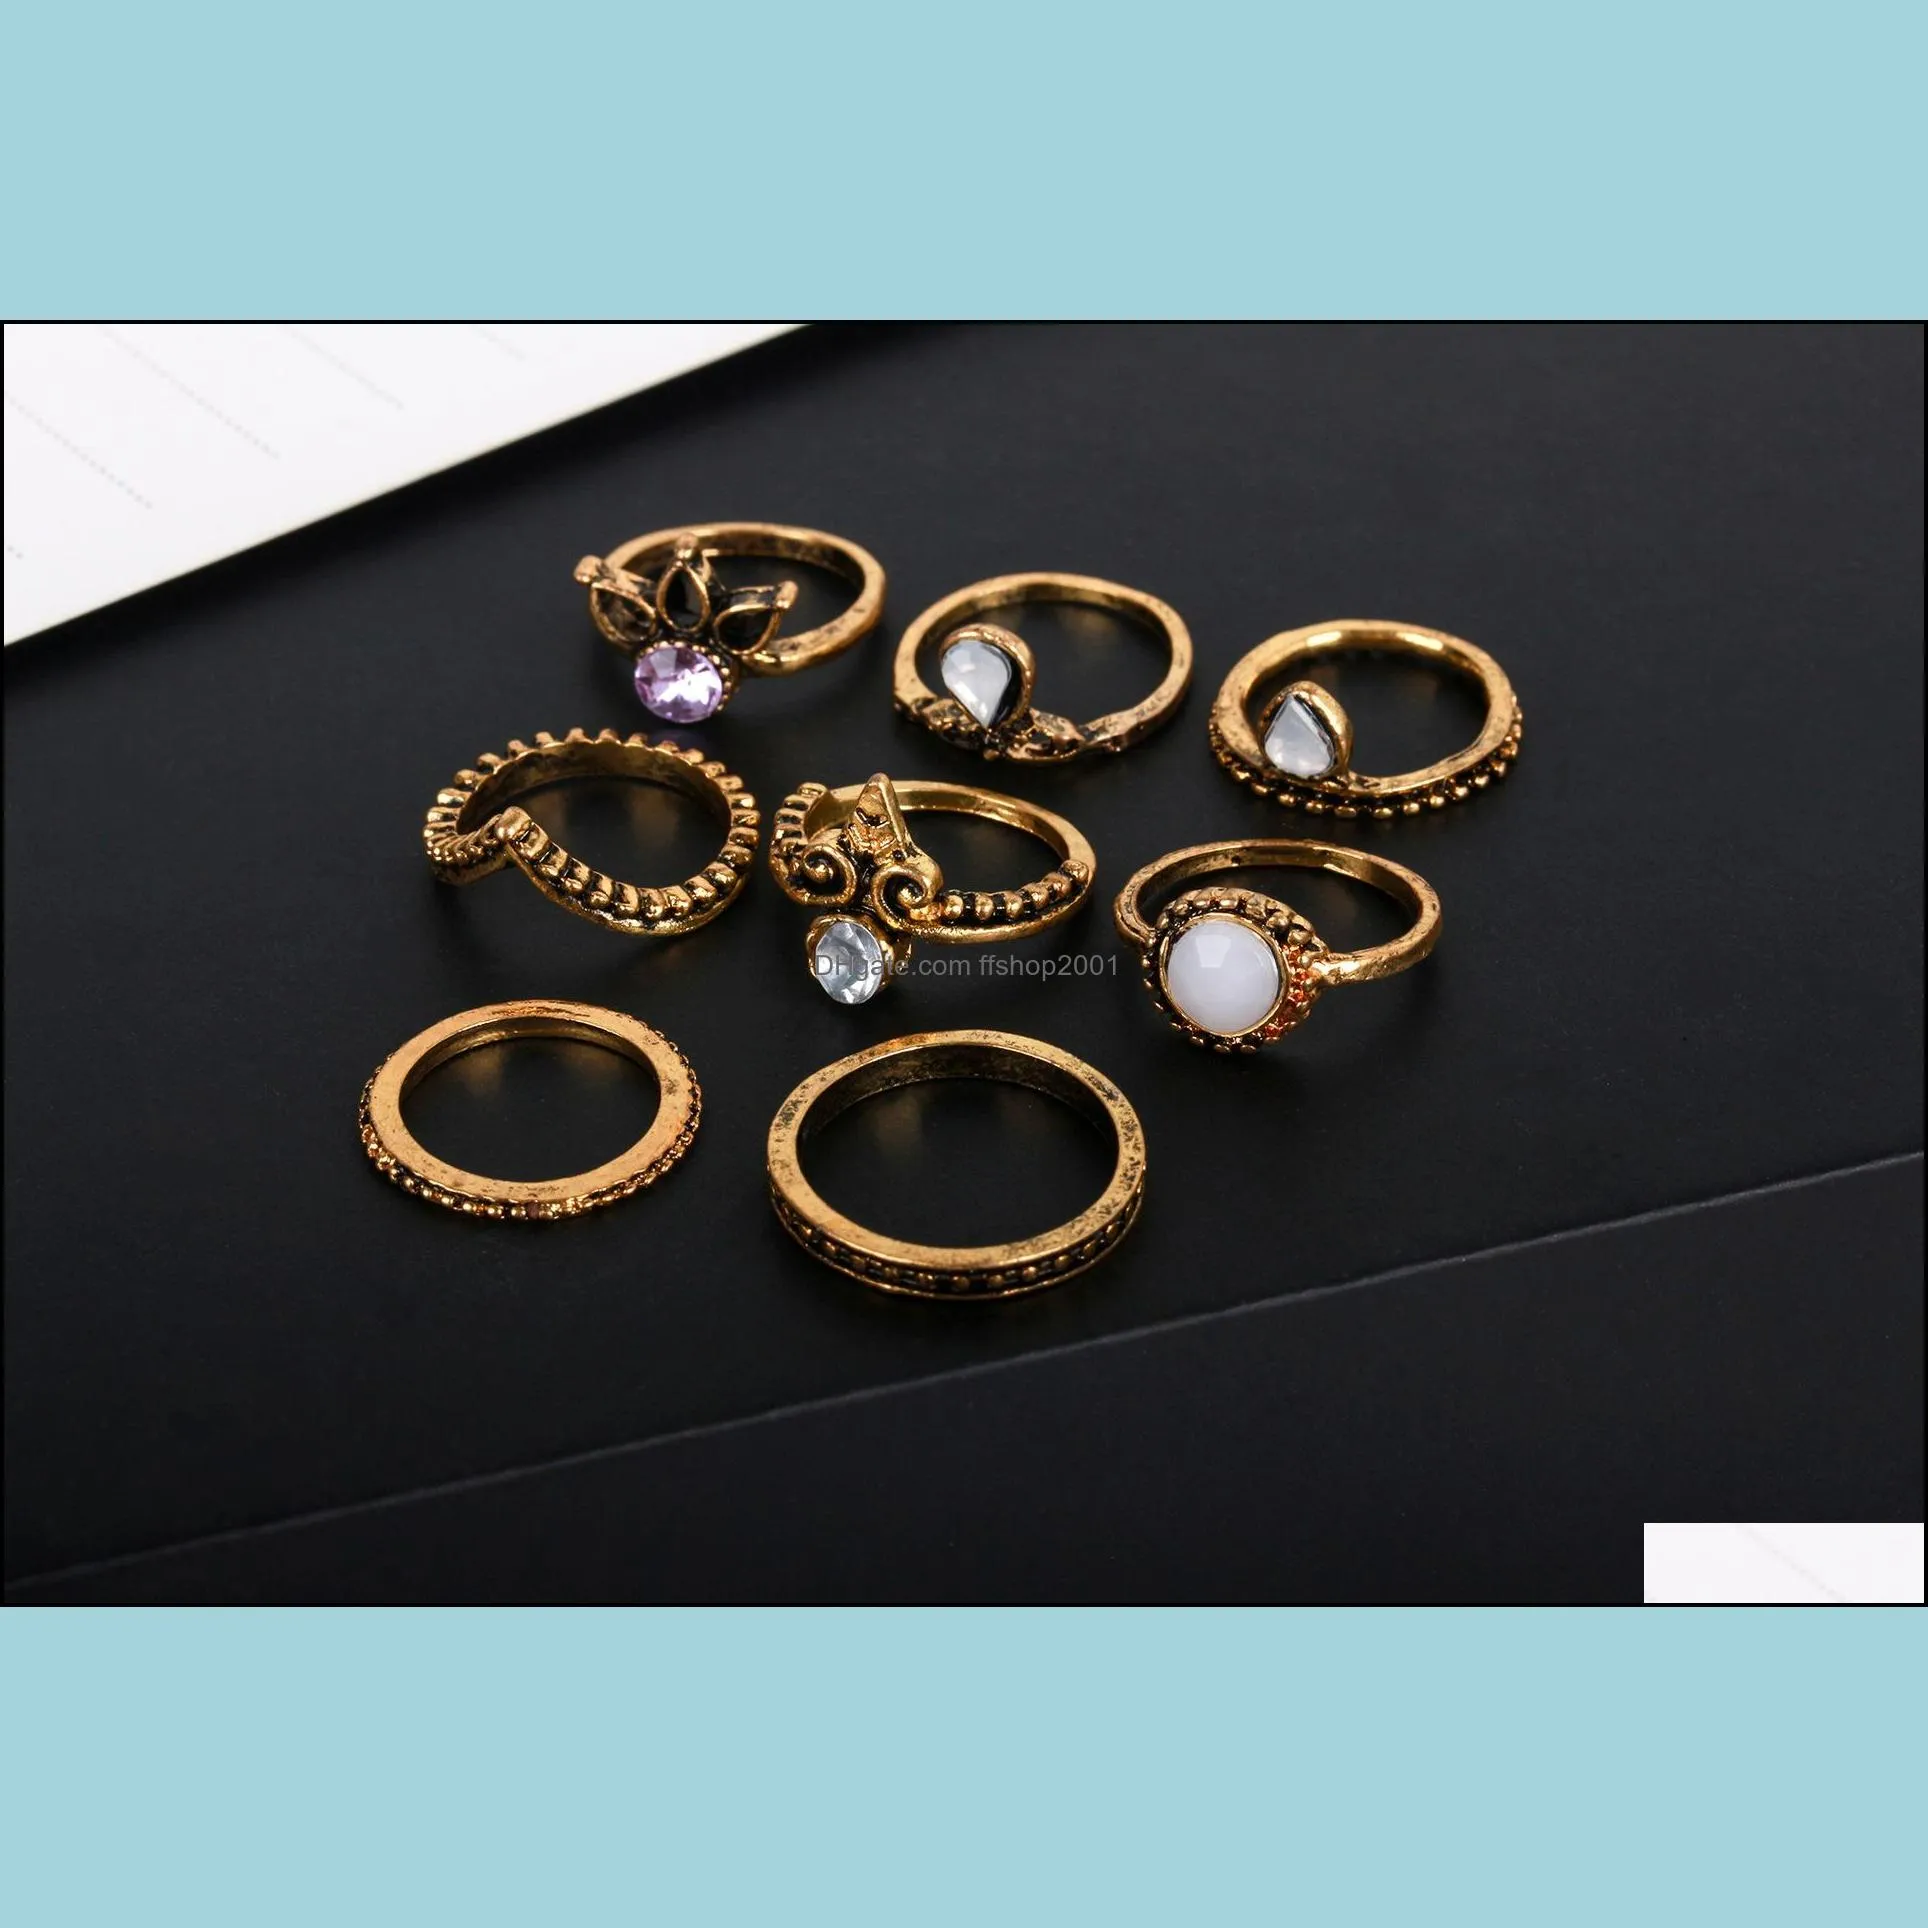 8pcs/set vintage rings crown white gem bronze brass knuckle ring ethnic carved boho finger rings for men women fashion